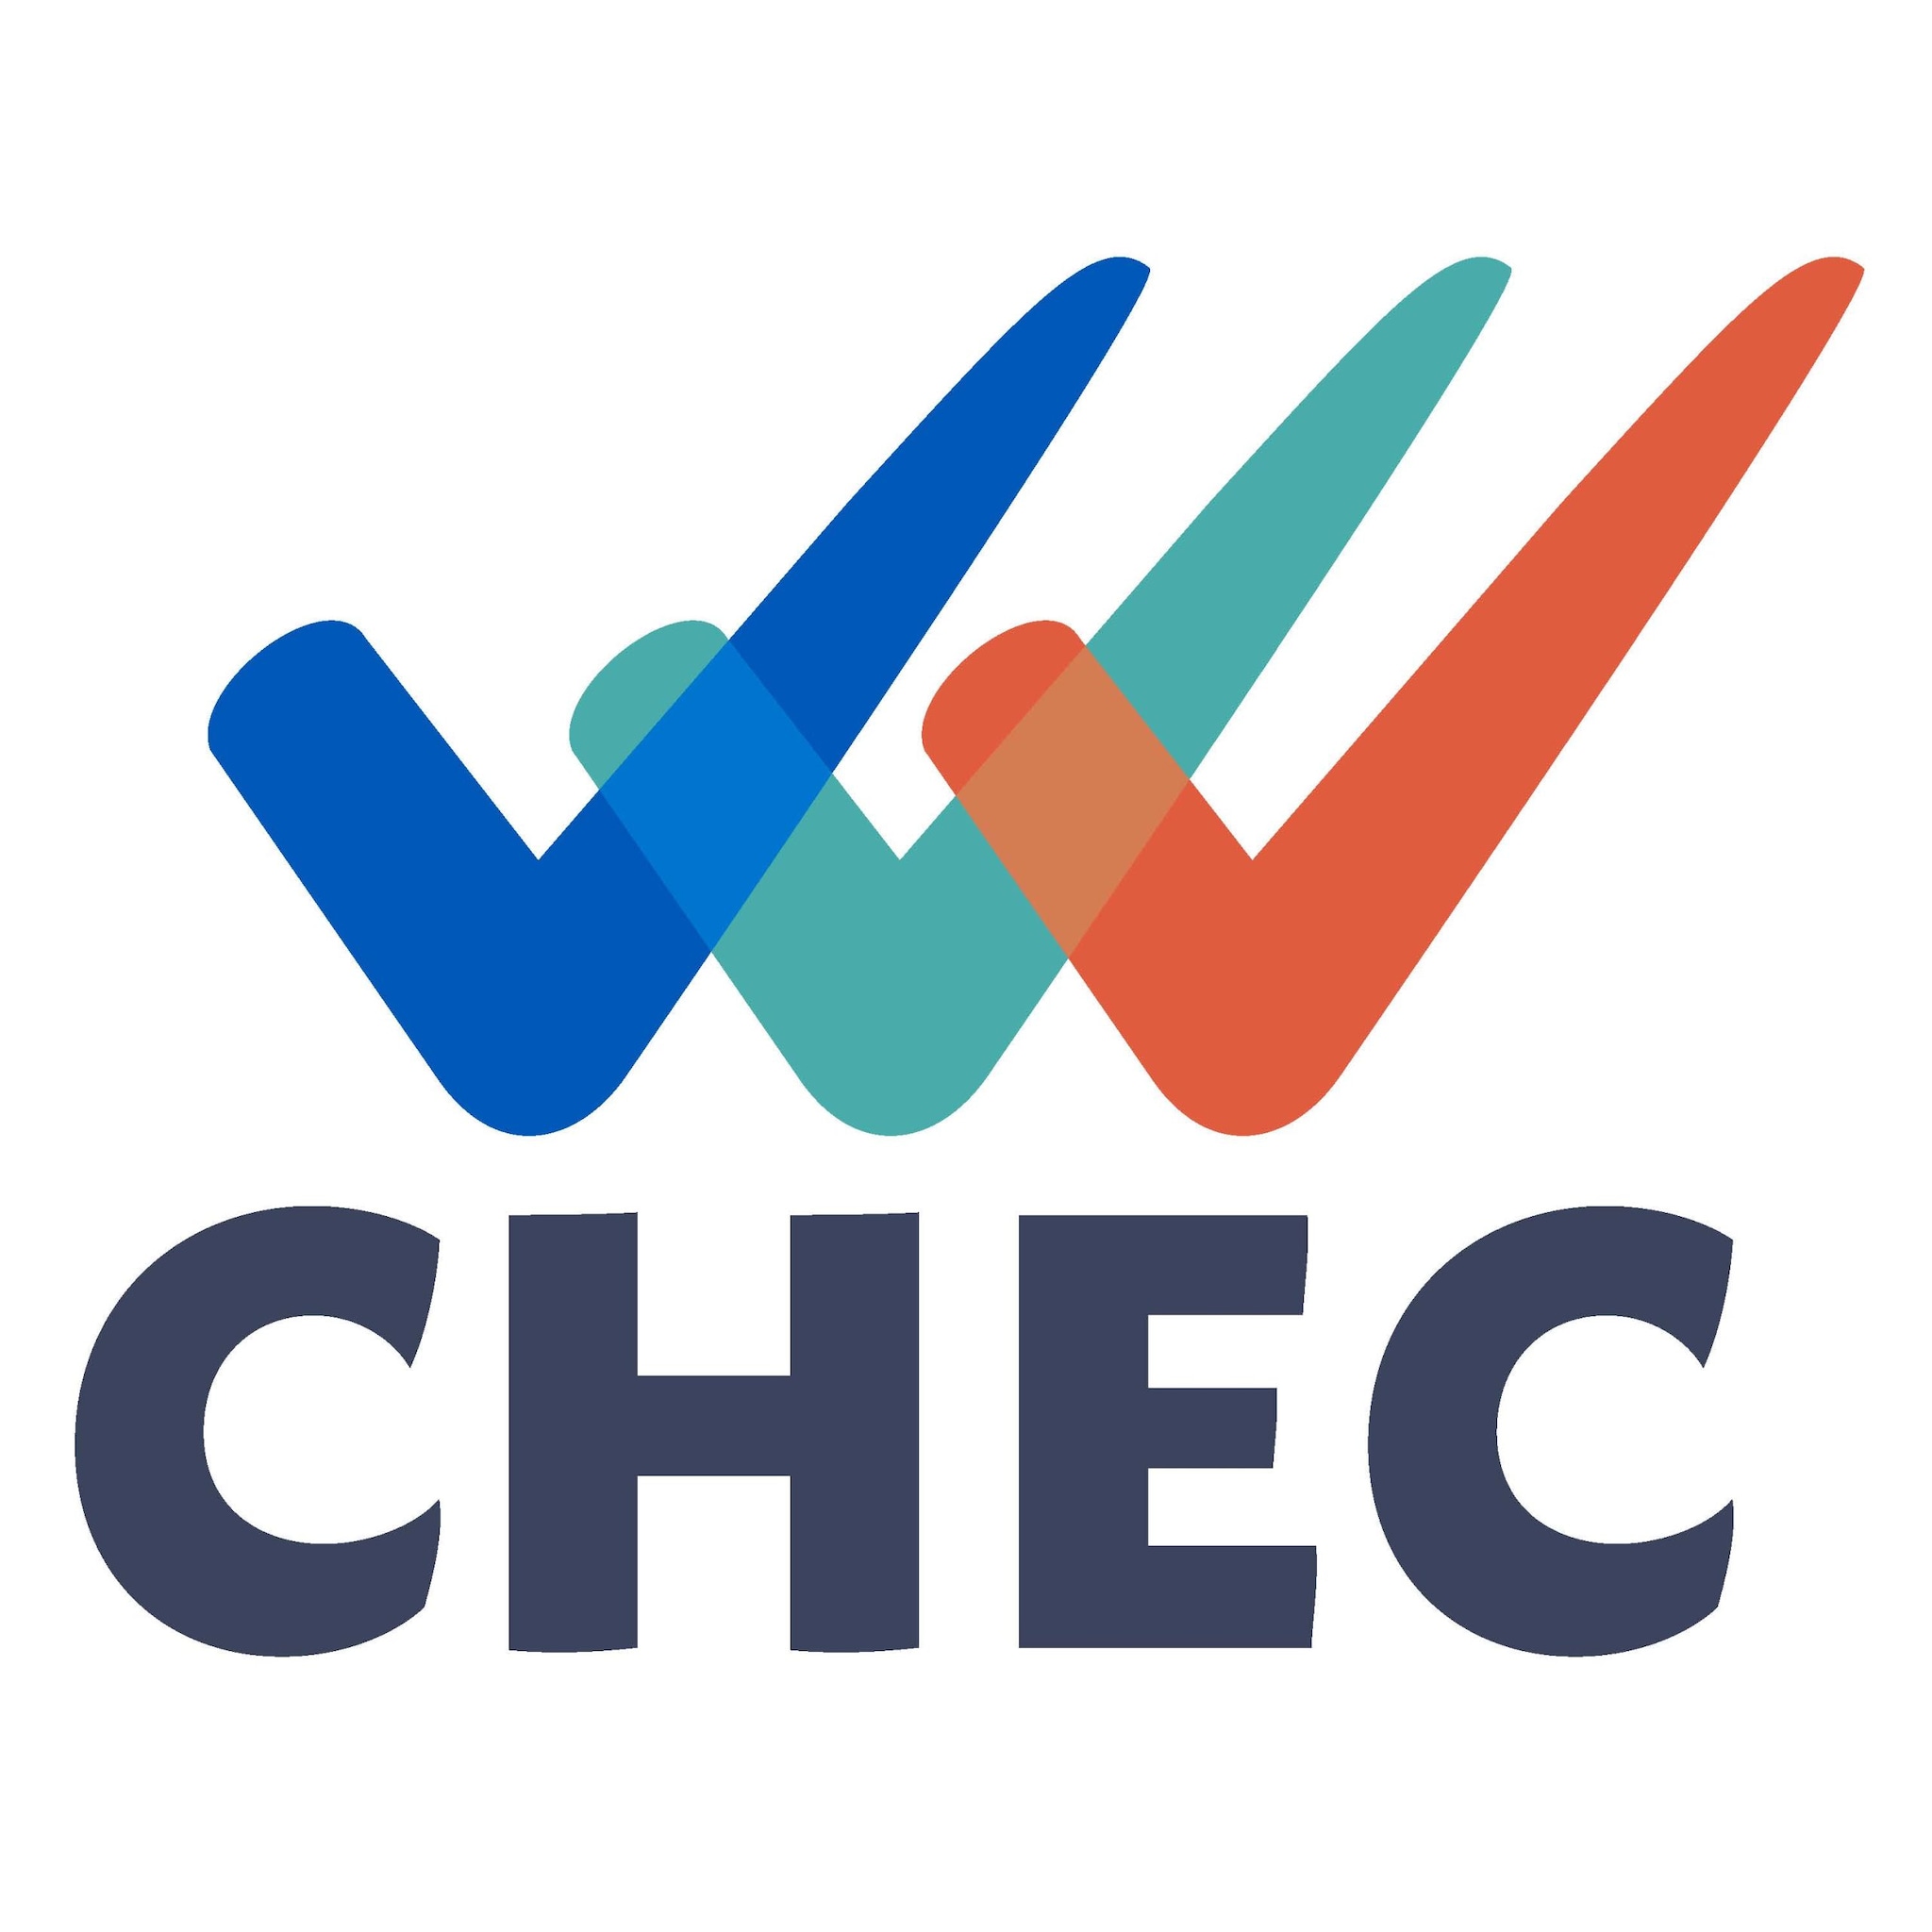 CHEC branding logo